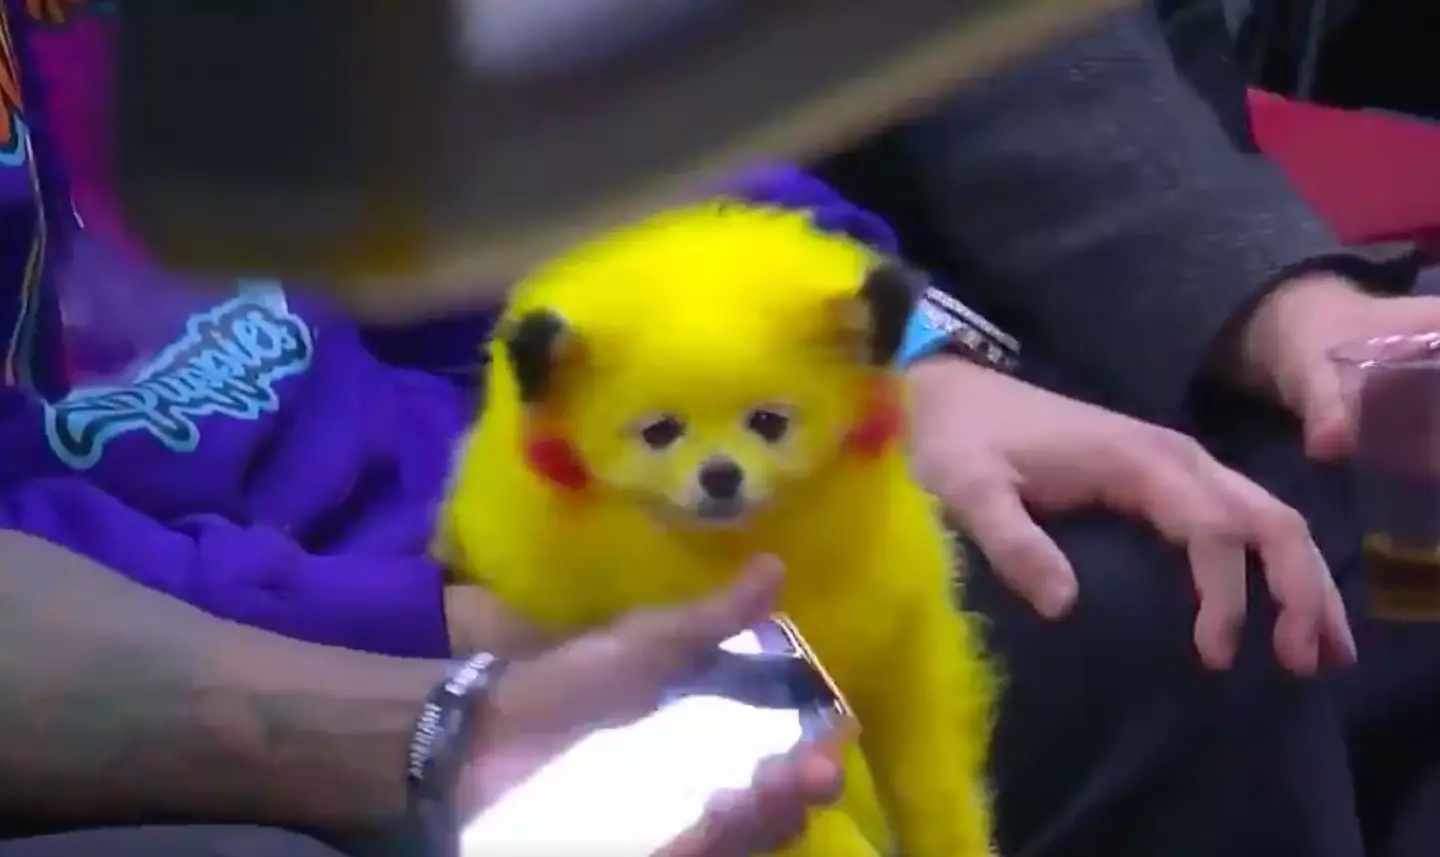 The dog had bright yellow fur.